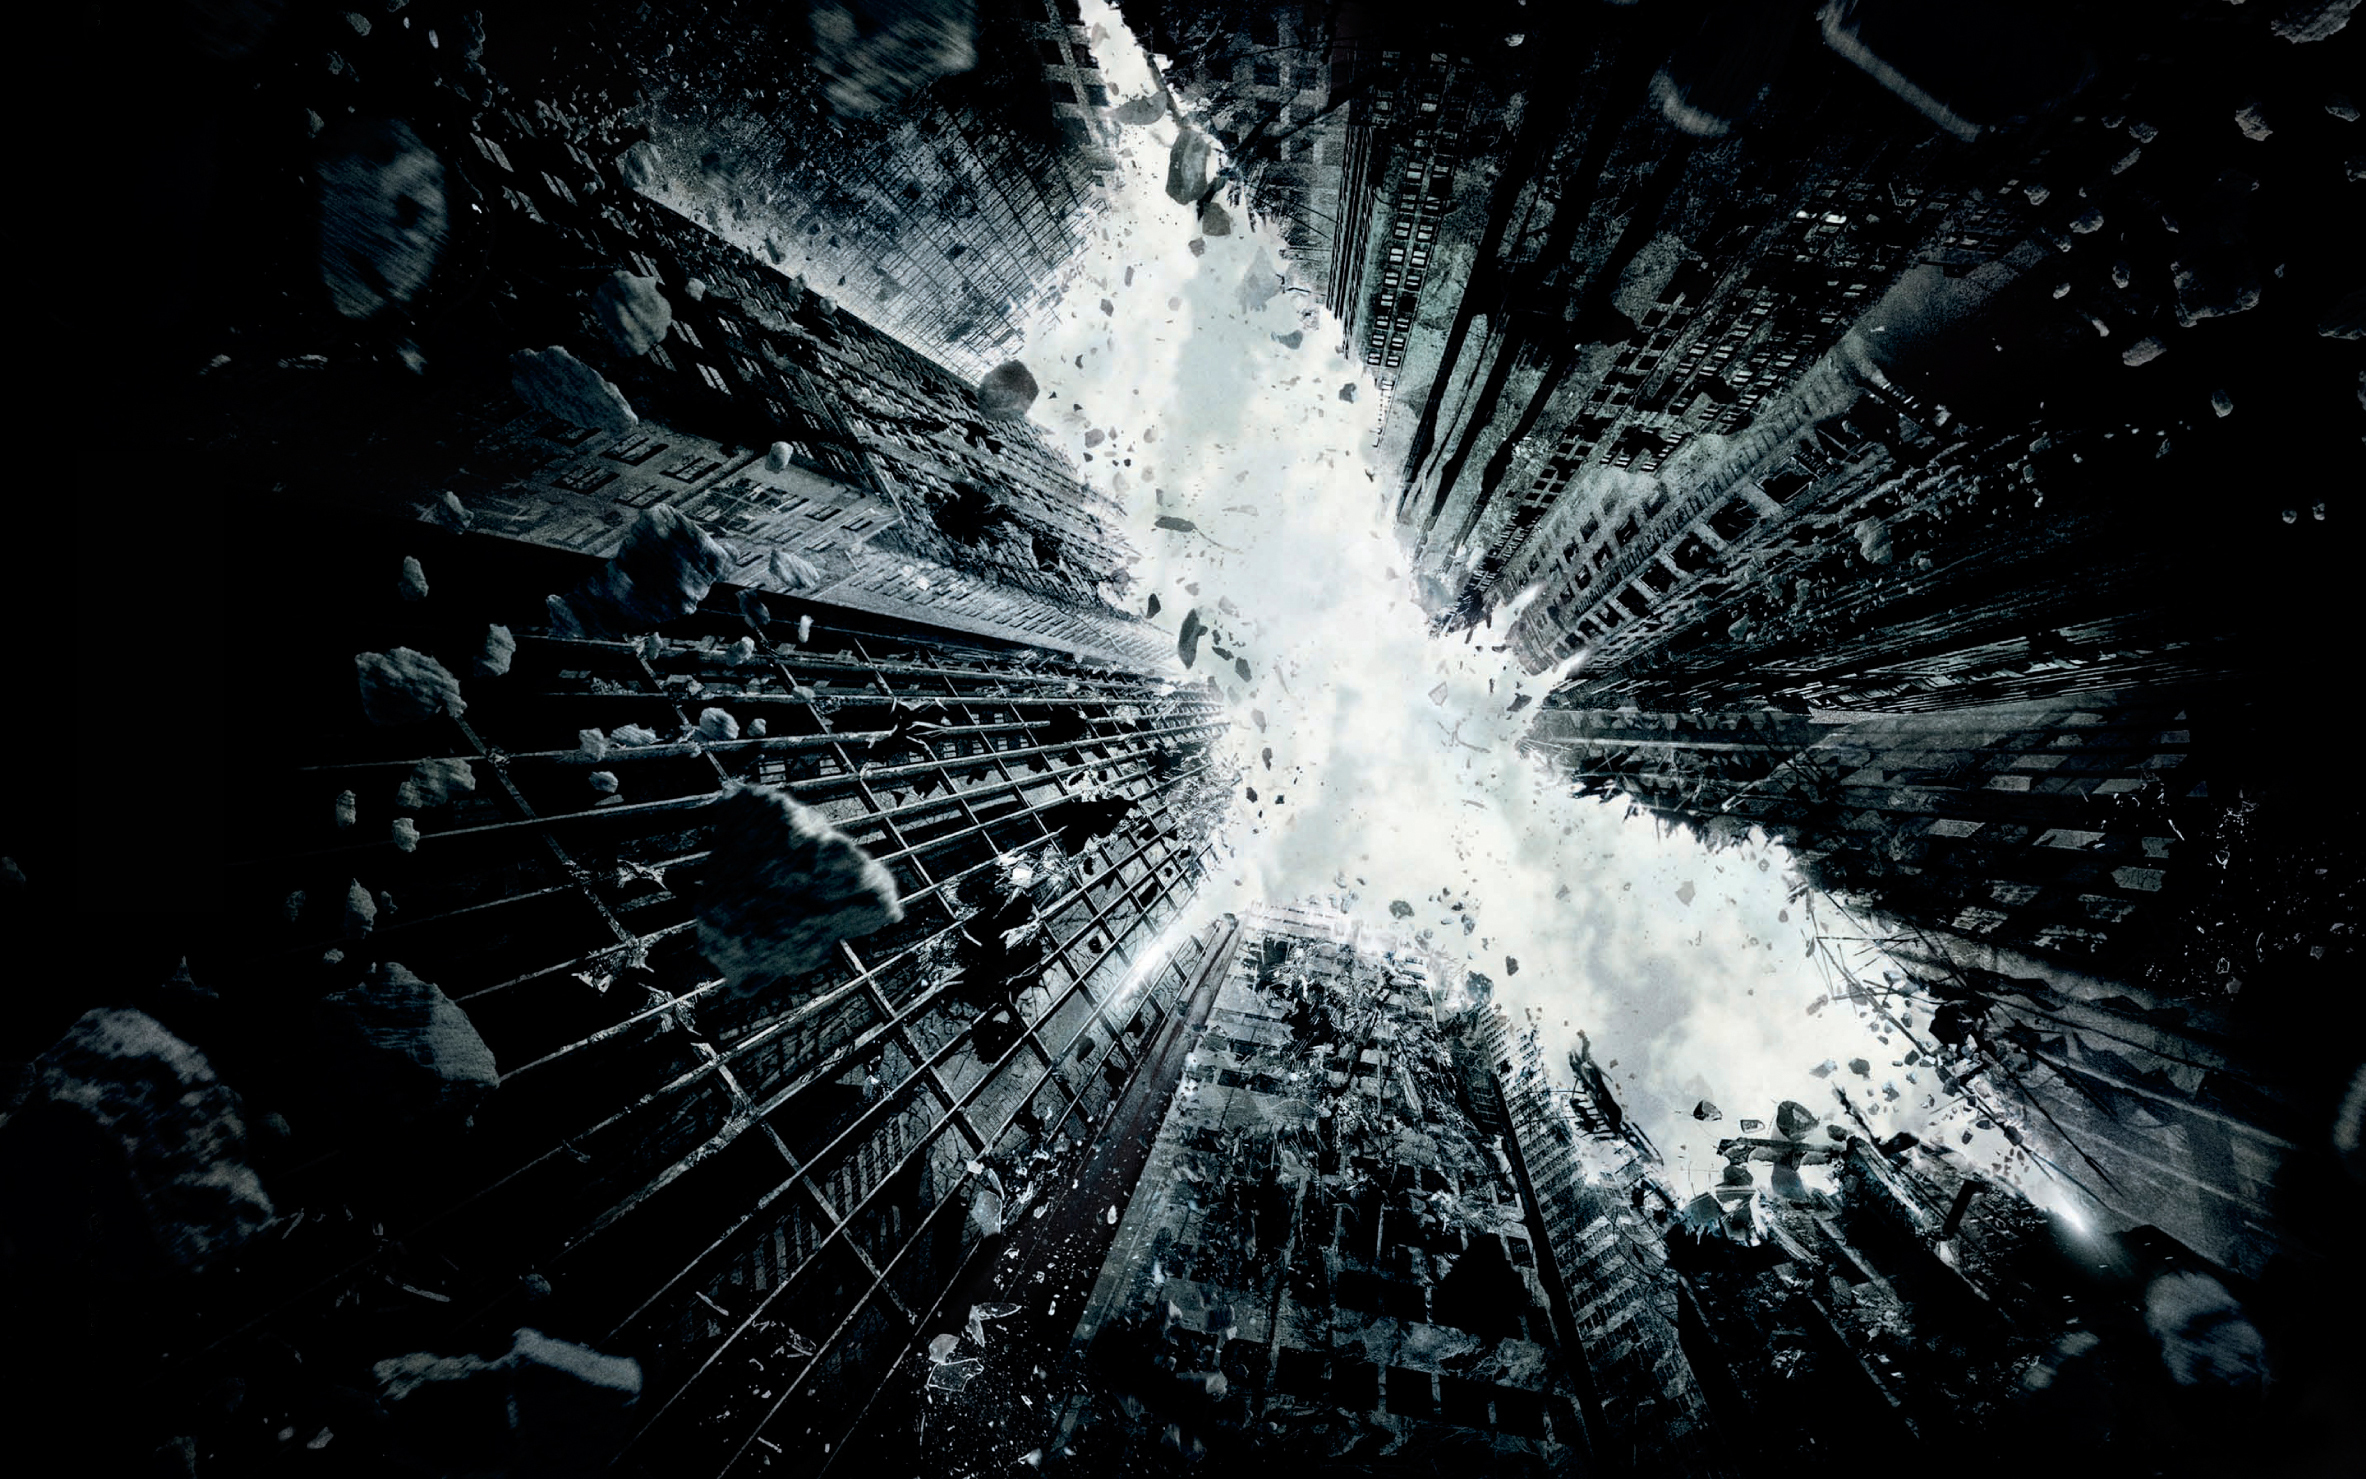 Movie The Dark Knight Rises HD Wallpaper | Background Image